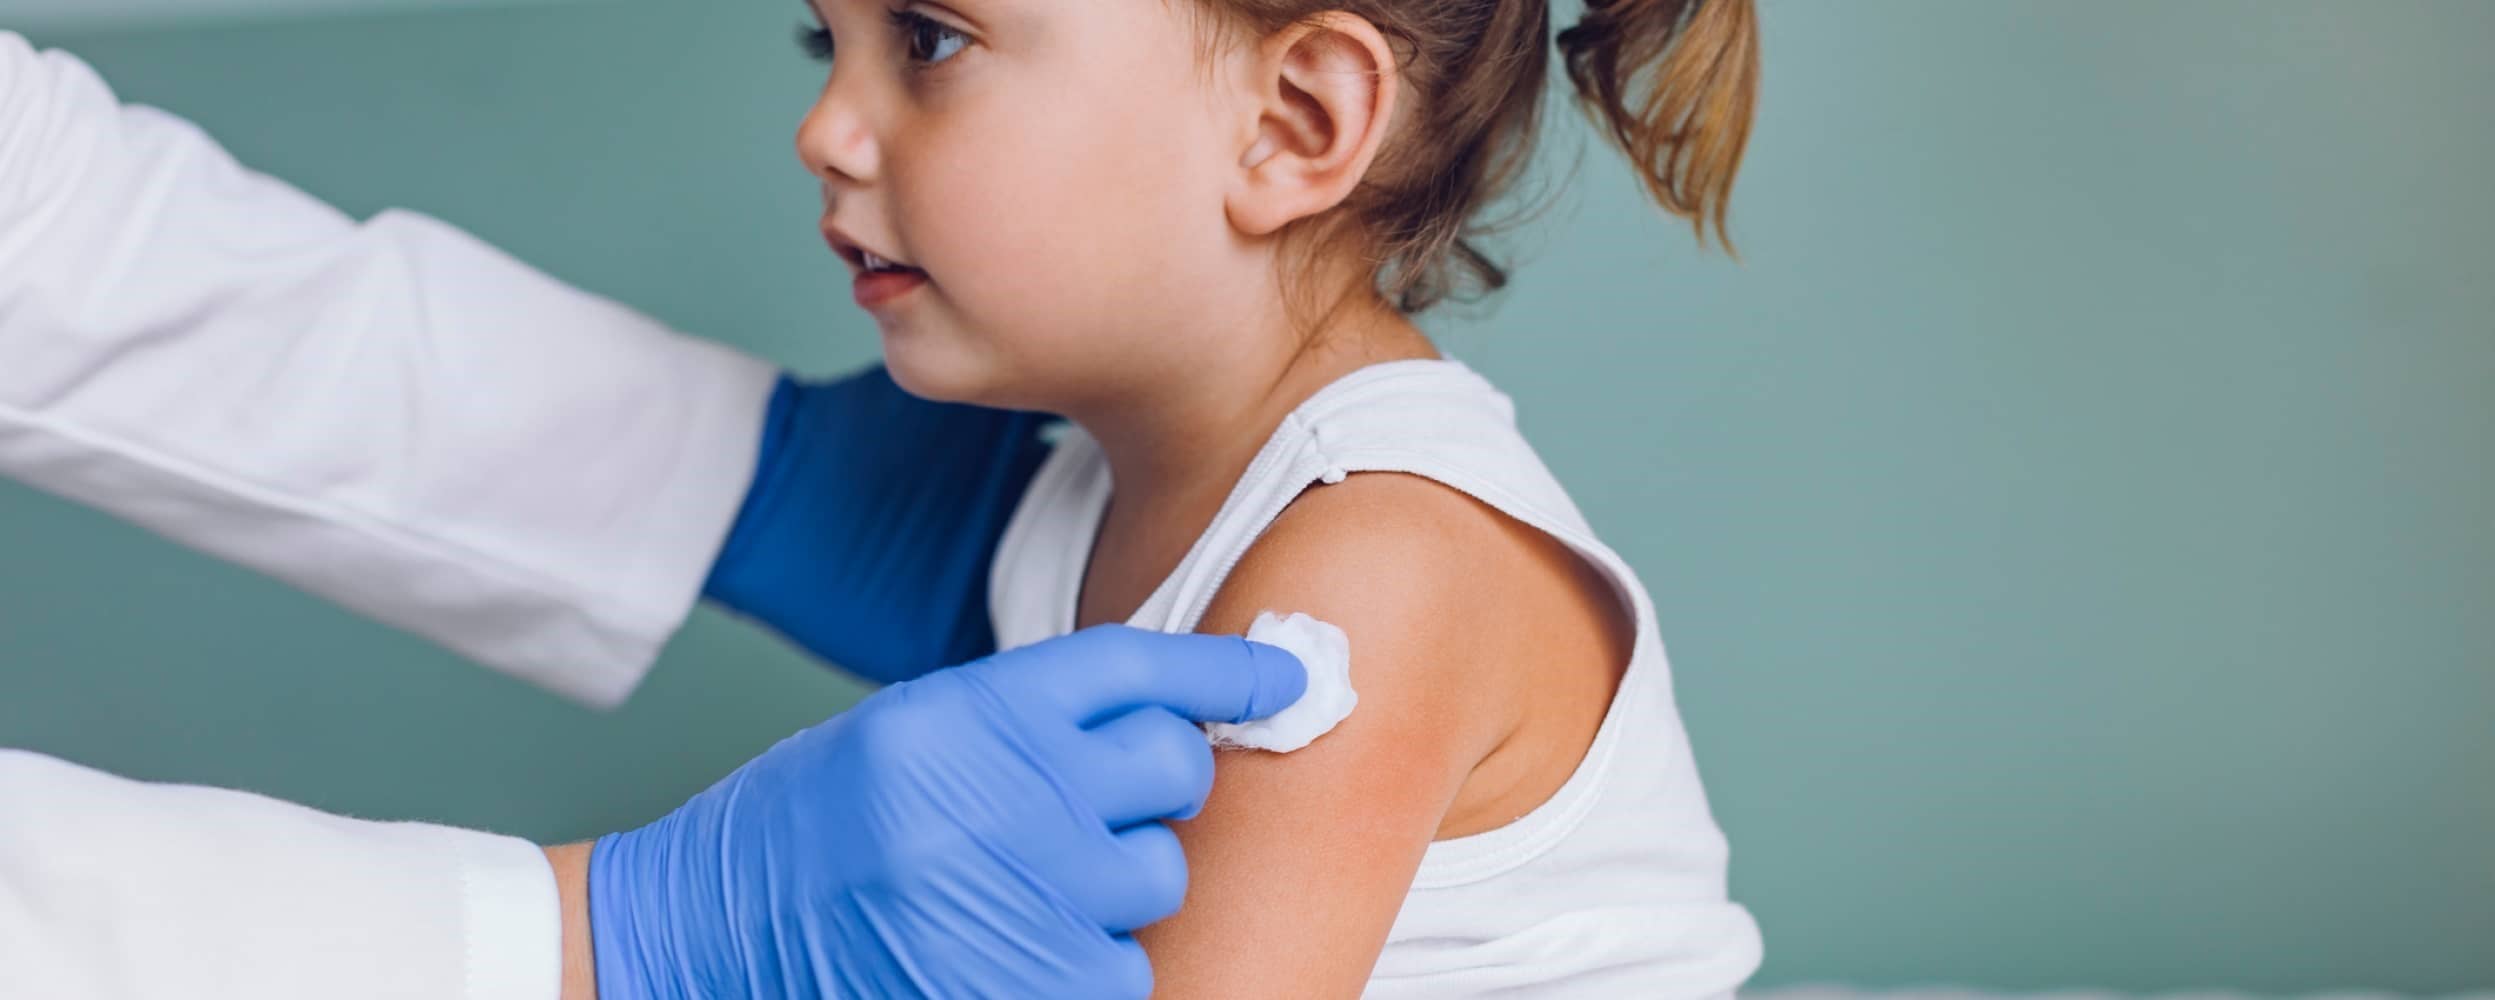 Hepatitis infantil: cómo detectarla